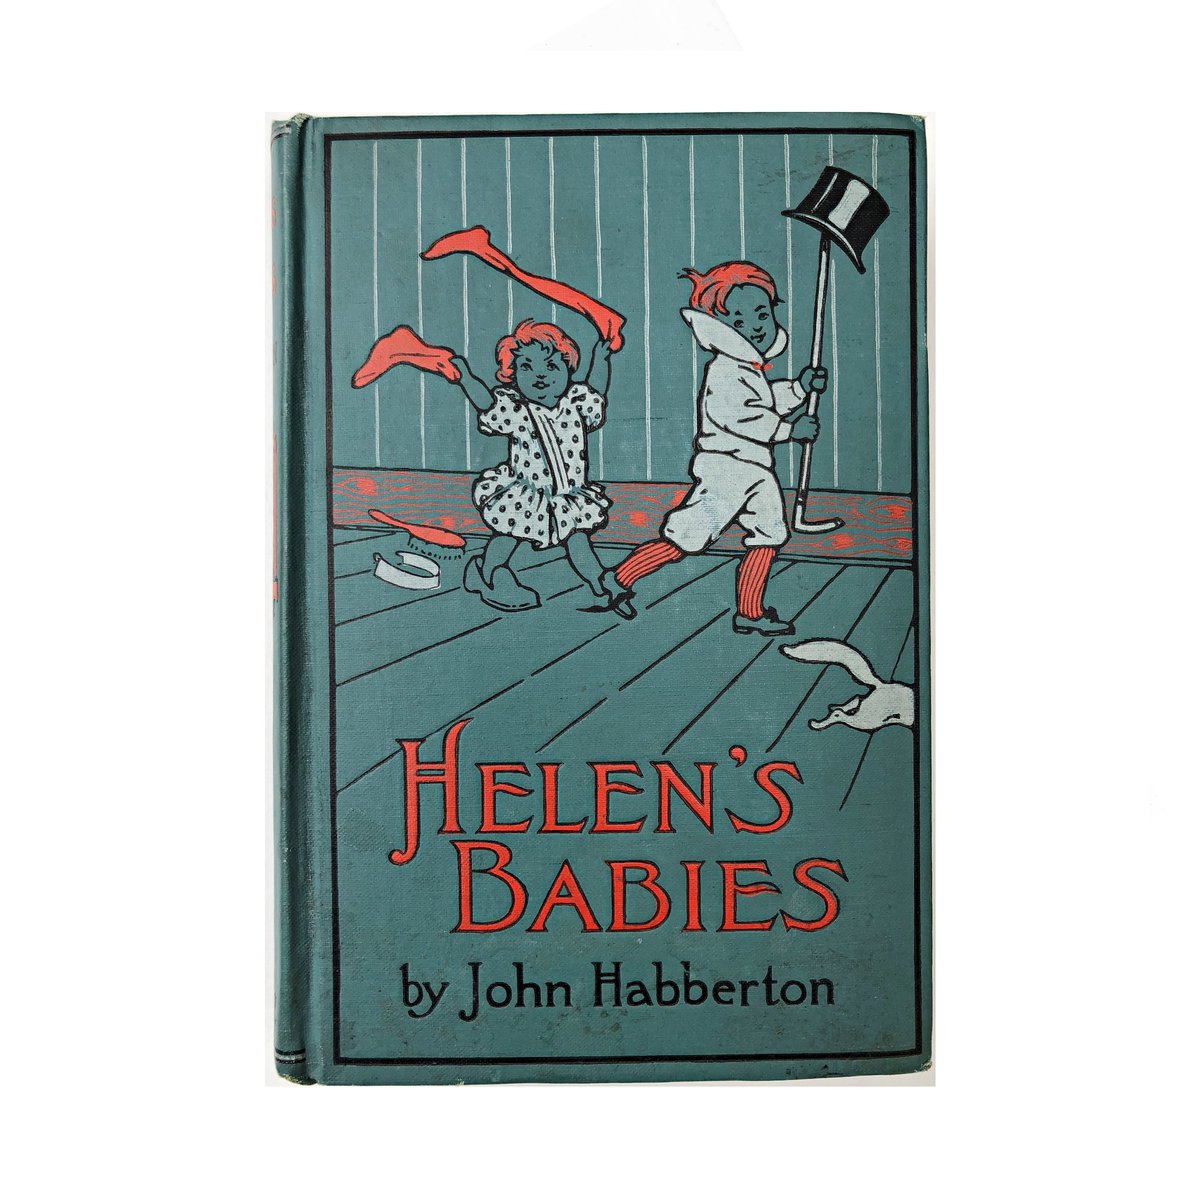 #HelensBabies by #JohnHabberton - #1800s81 - #Illustrated #Antique #ClassicBook #vintagebook #antiquebook #boymom #vintageboyhood #boyhood #boyslife #rowdyboys #vintagekids #19thcentury #bleakhousebookshop ---> etsy.me/3HoAmRB via @Etsy